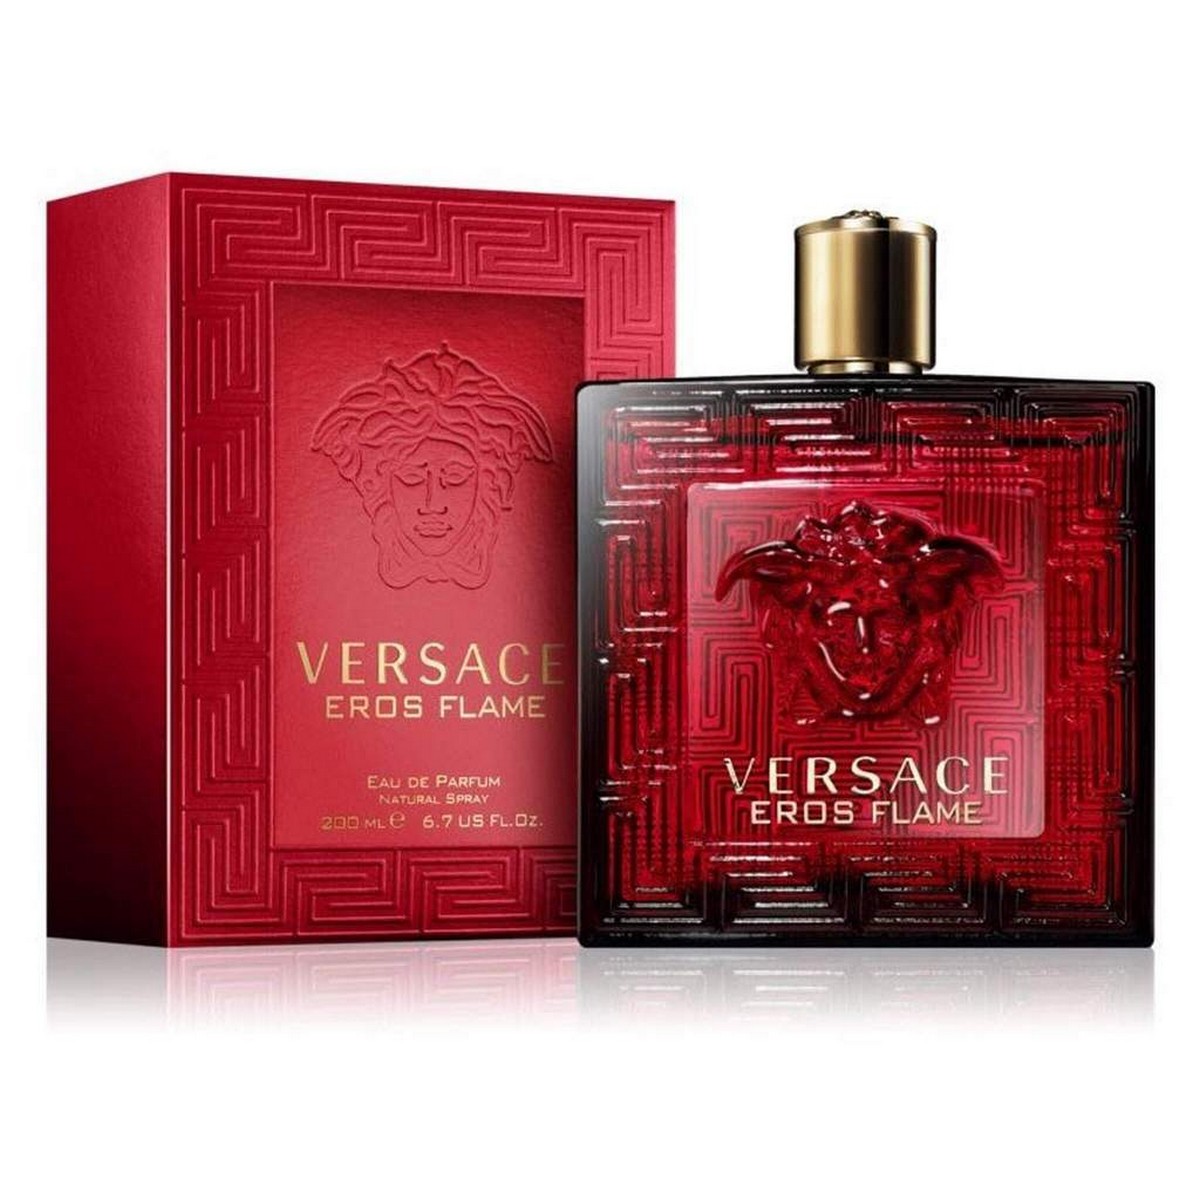 Versace Eros Flame Parfum 100ml Price in Pakistan